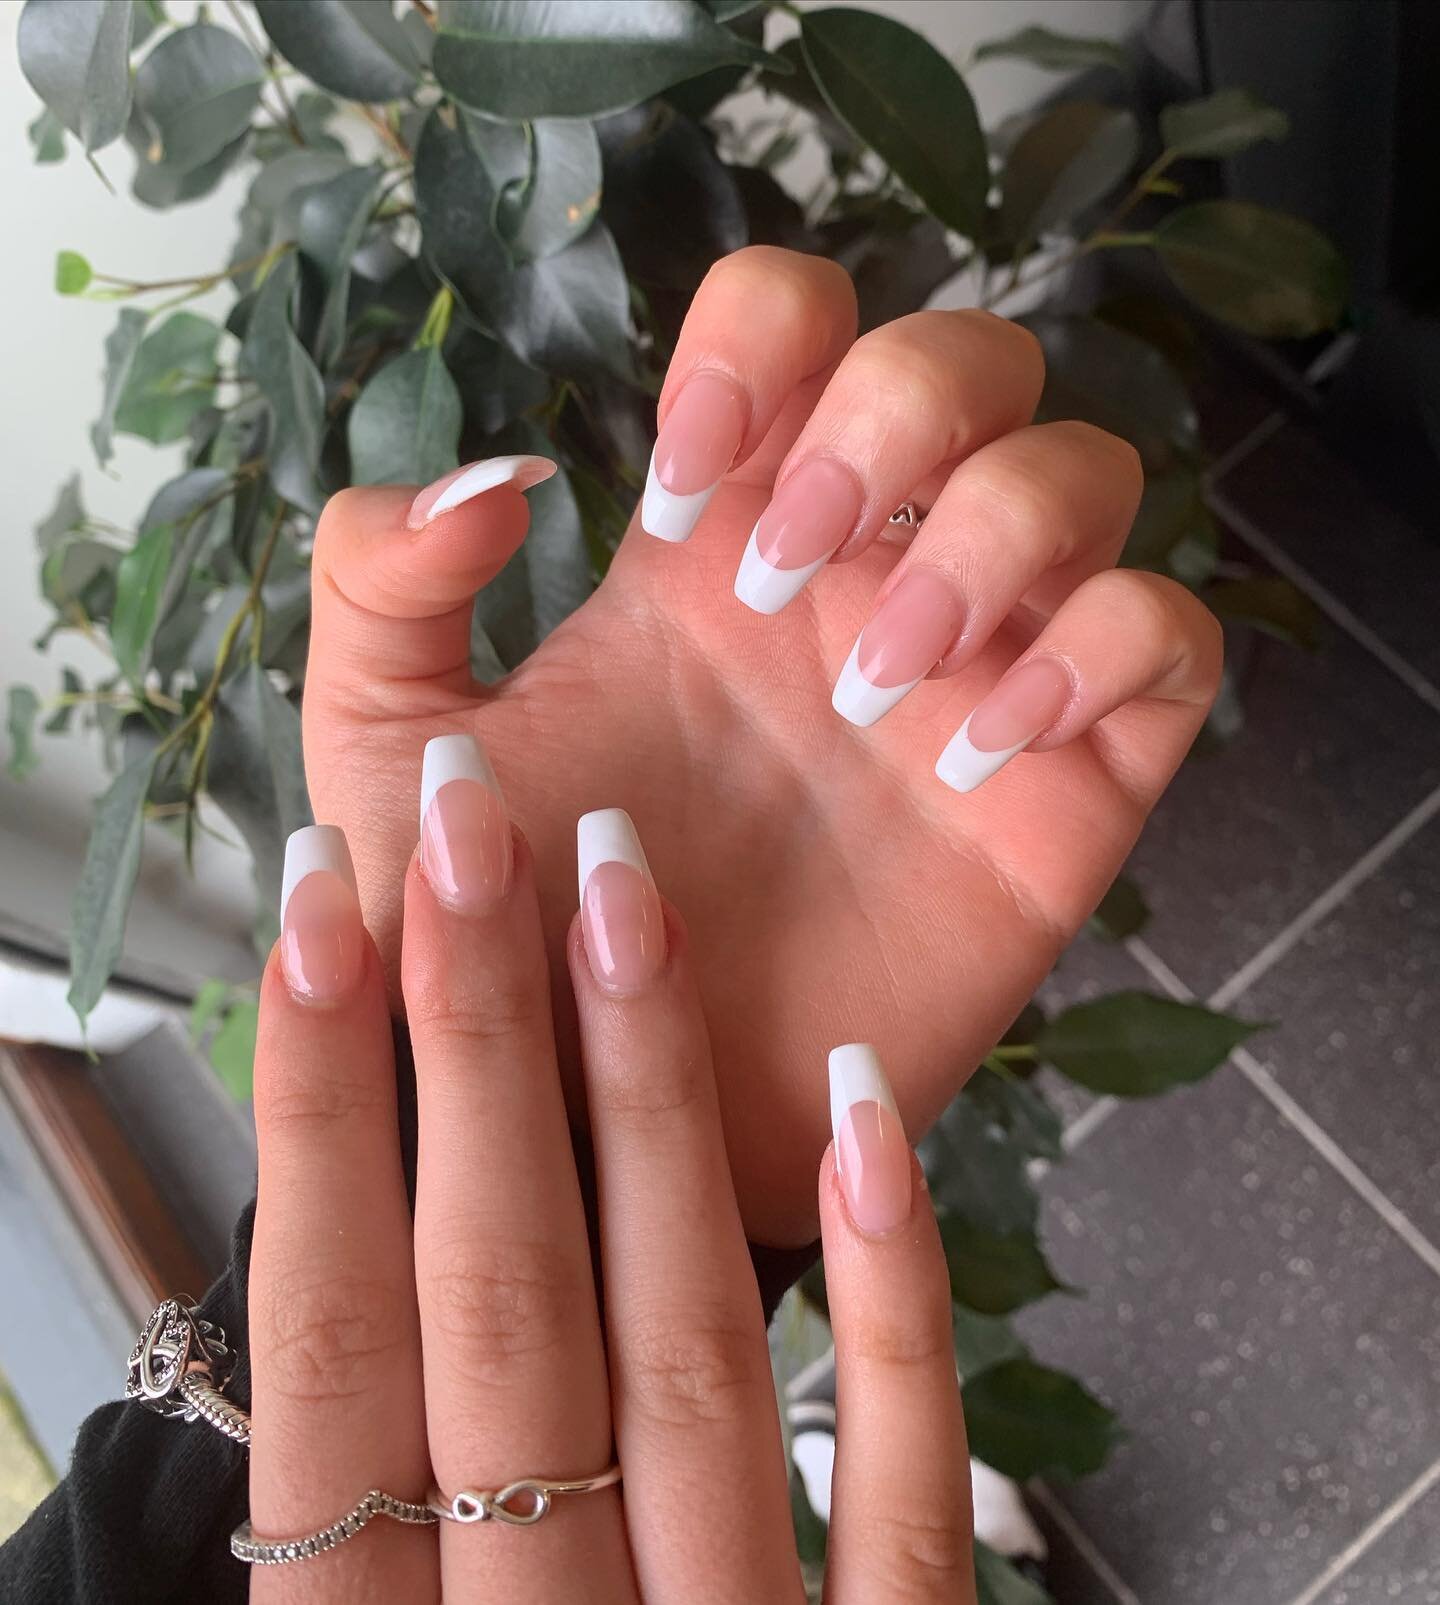 Classic white tips 

#nails #nailart #manicure #gelnails #nailstagram #nailswhitetip #nailcolourtip  #nailstyle #nailsart #naildesign #inspire #acrylicnails #gel #nailsnailsnails #nailtech #pedicure #gelpolish #nailinspo